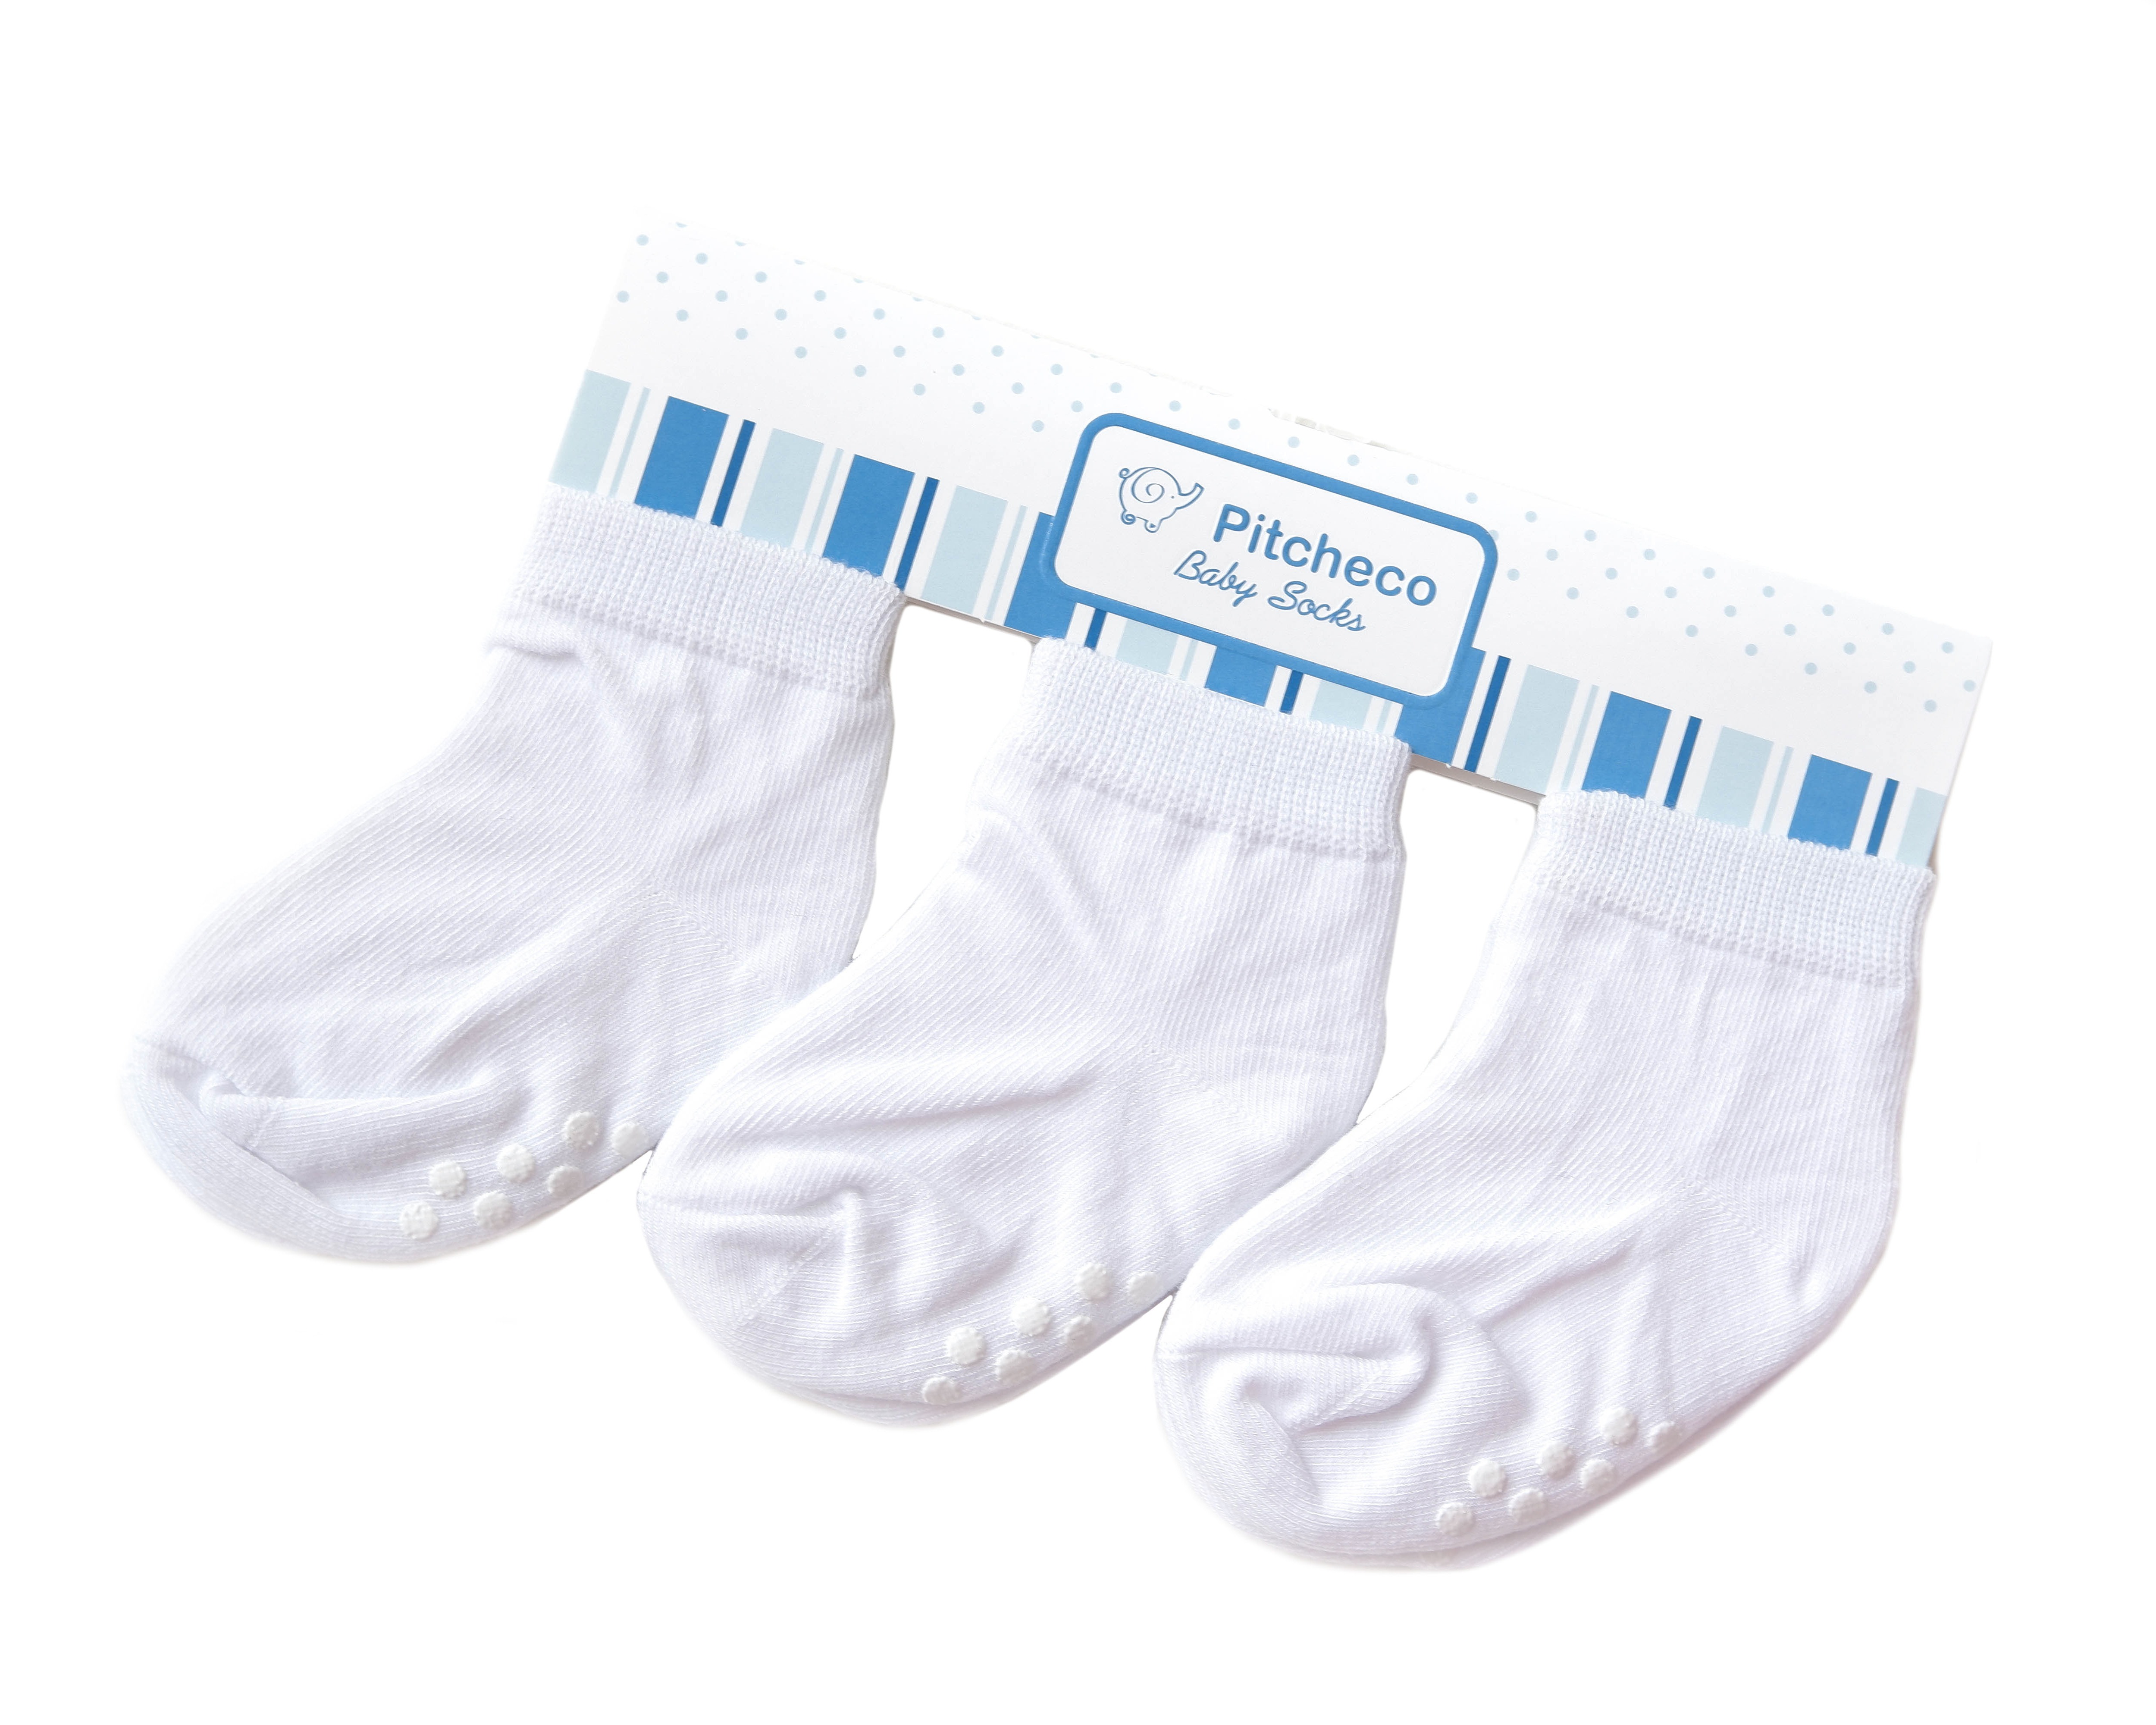 baby socks on sale